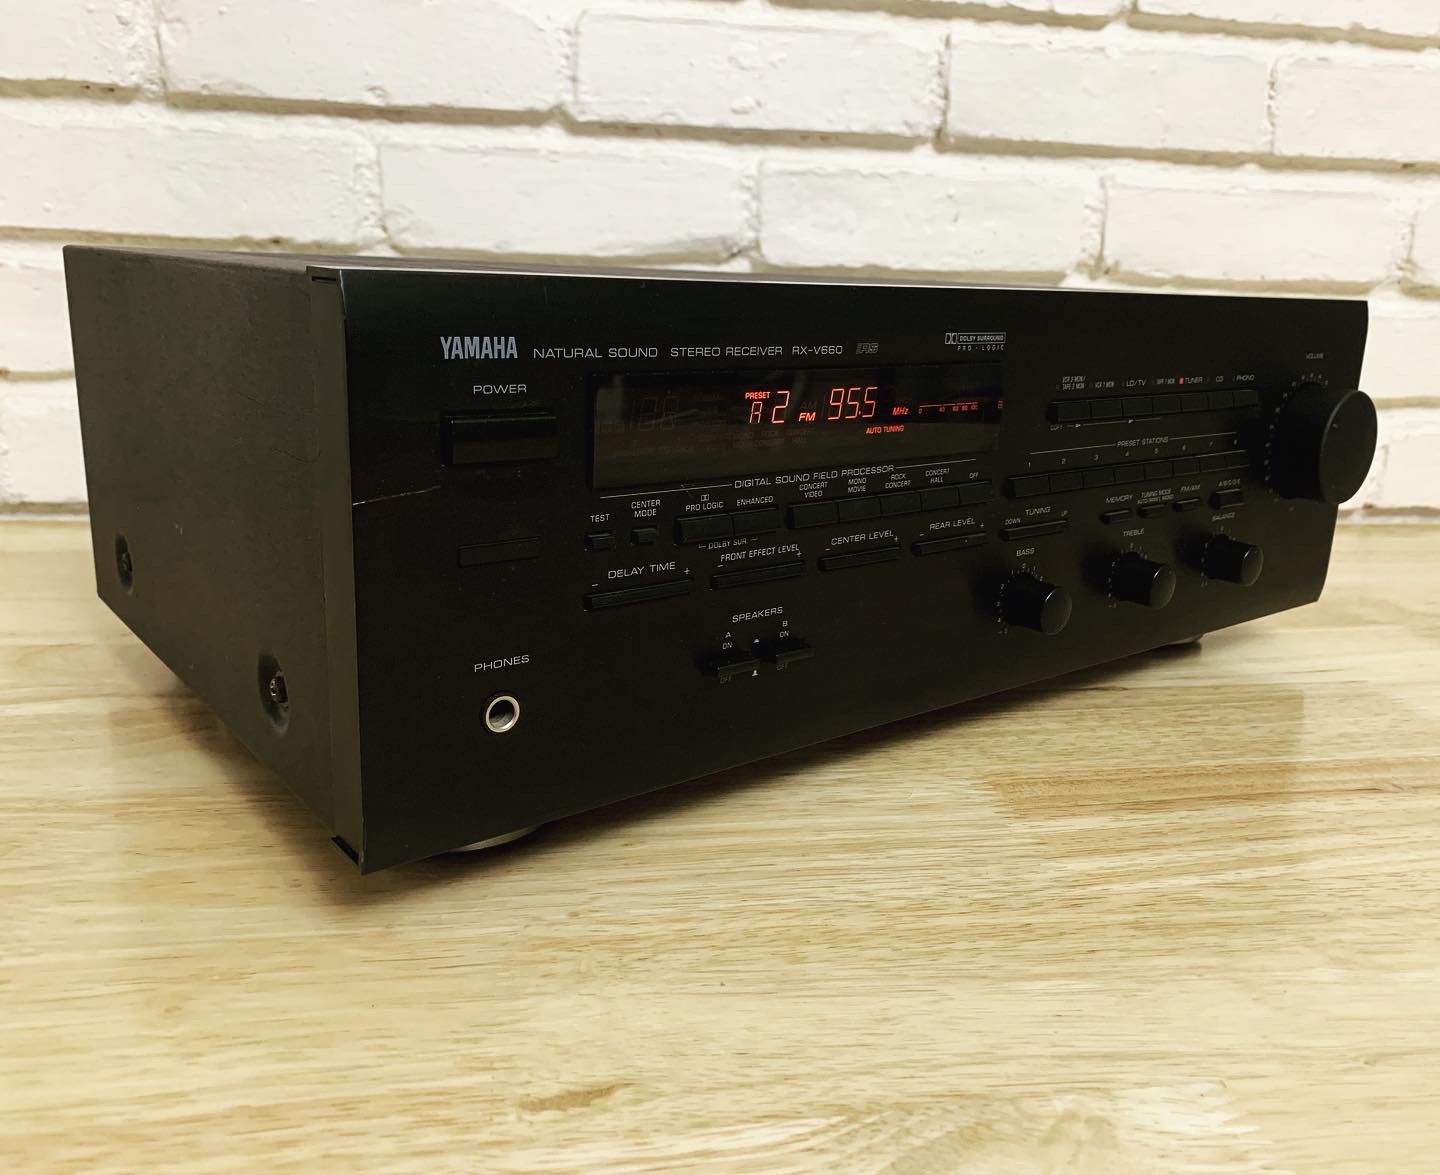 Yamaha RX-V660 Natural Sound Stereo Receiver